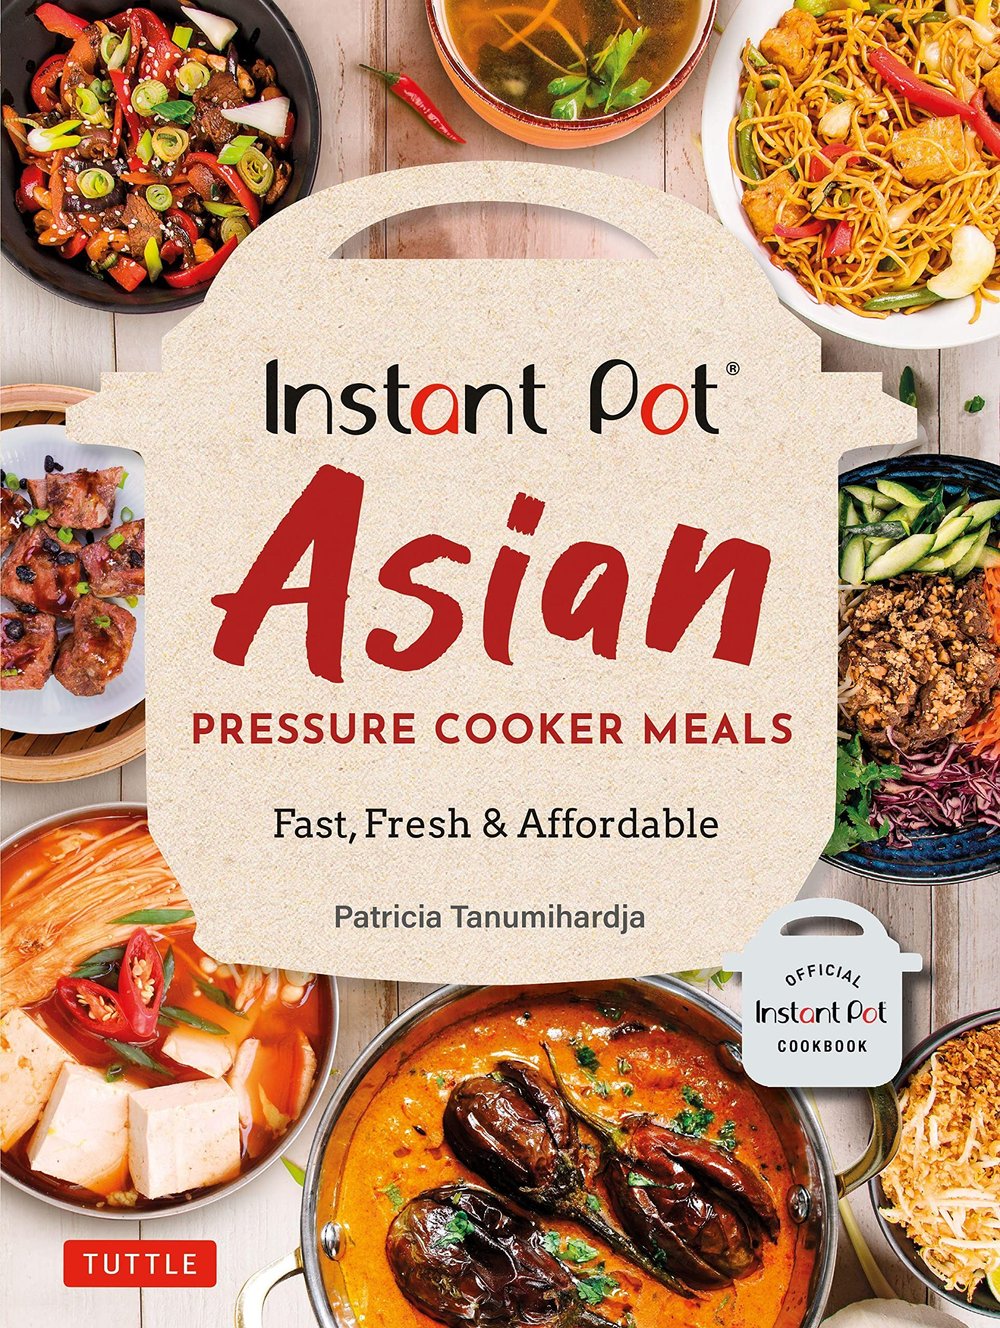 Instant Pot Asian Pressure Cooker Meals.jpg